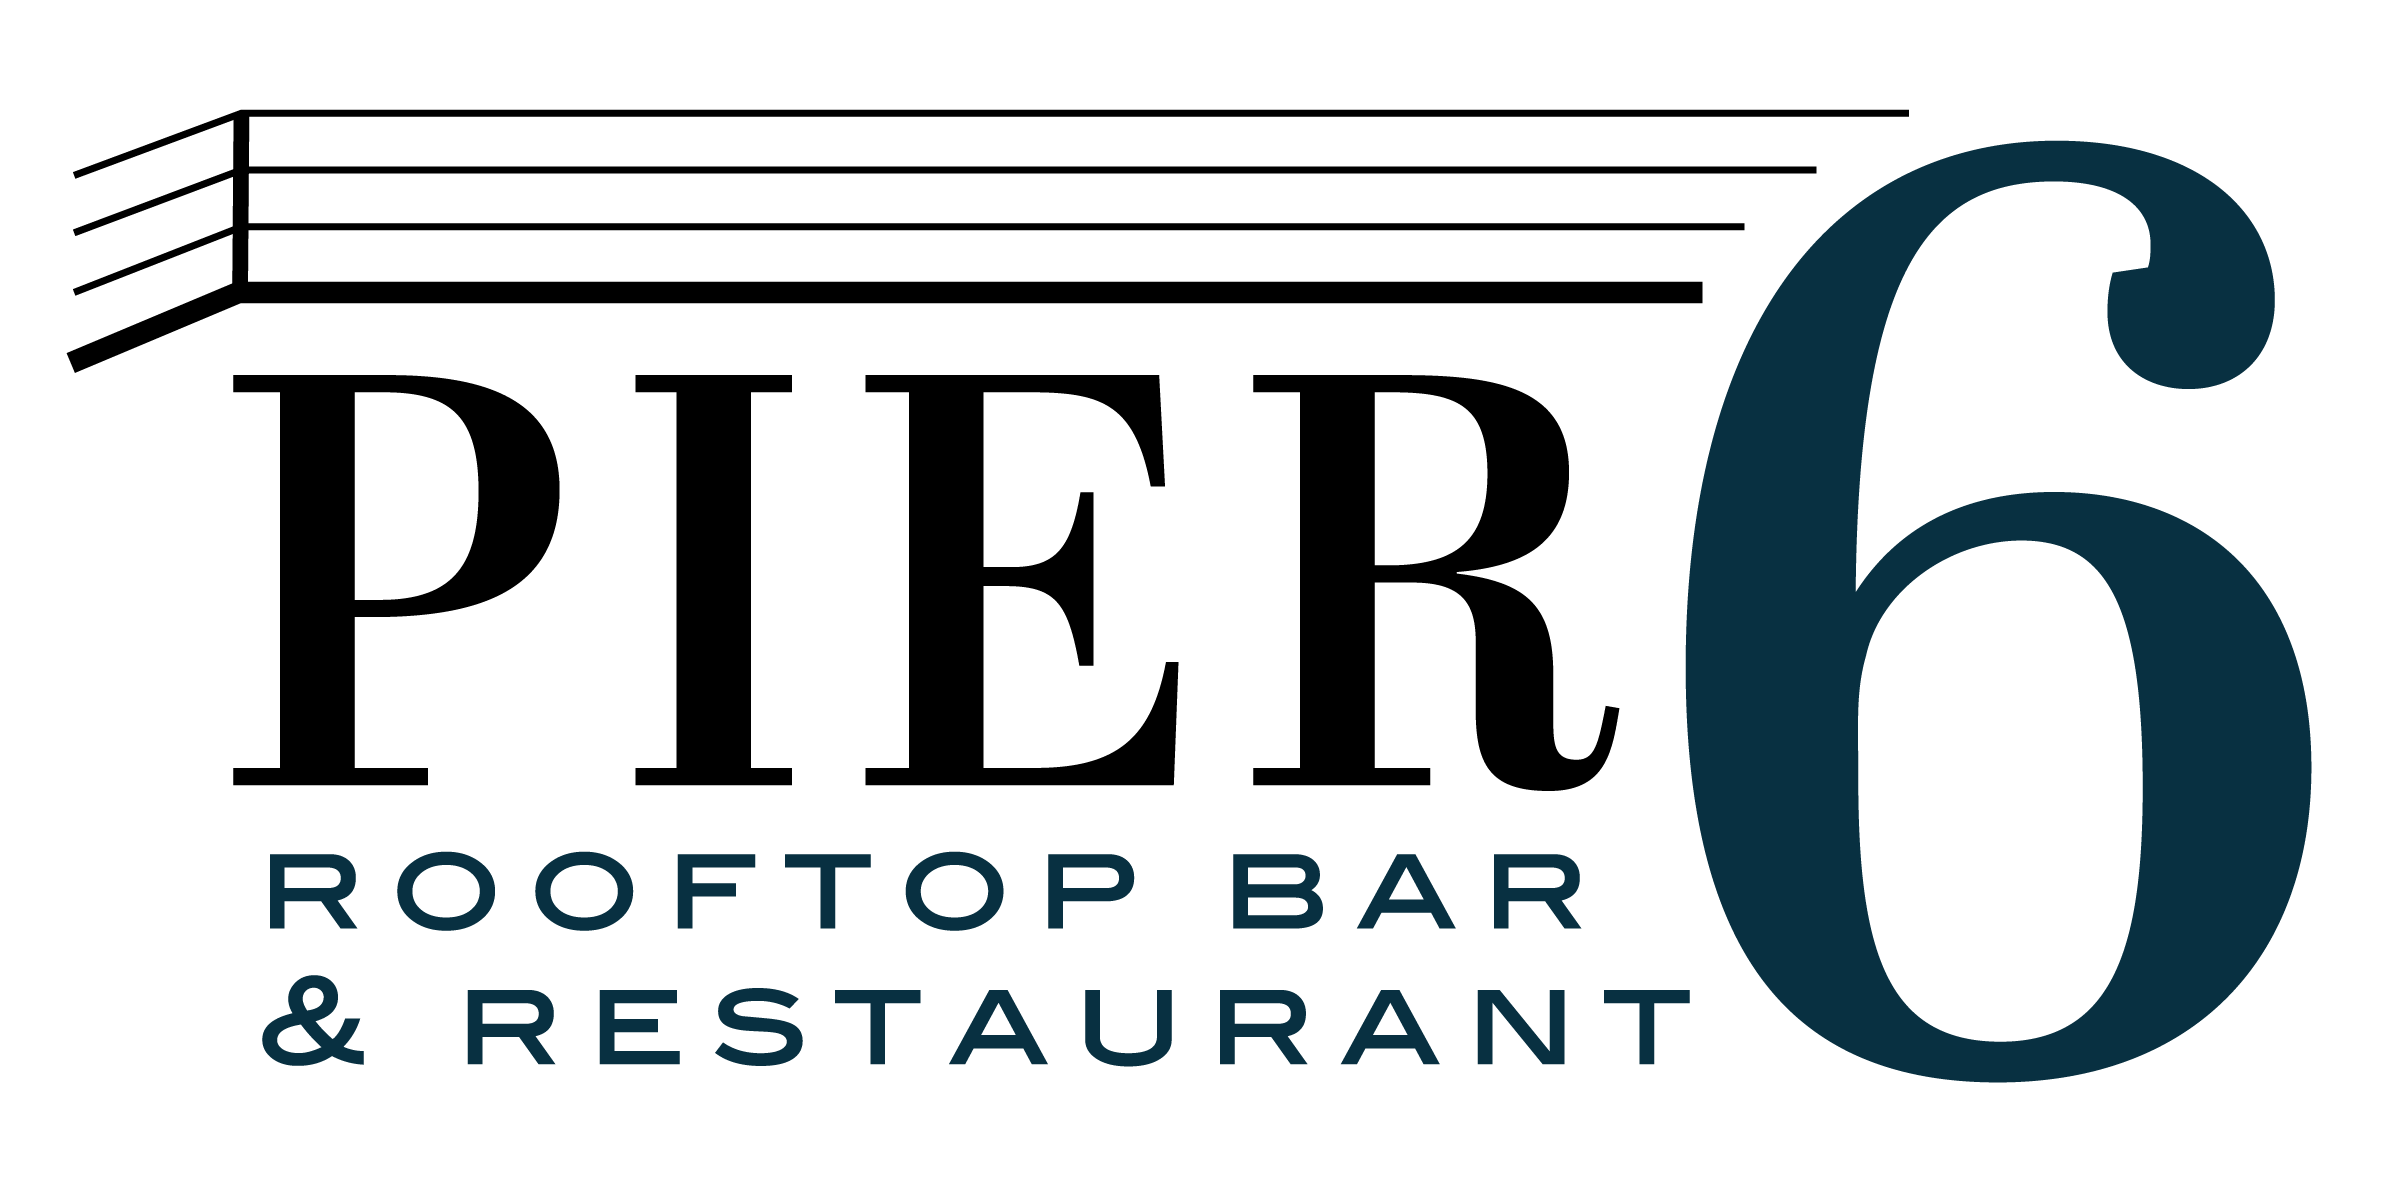 Pier 6 Rooftop Bar Restaurant logo